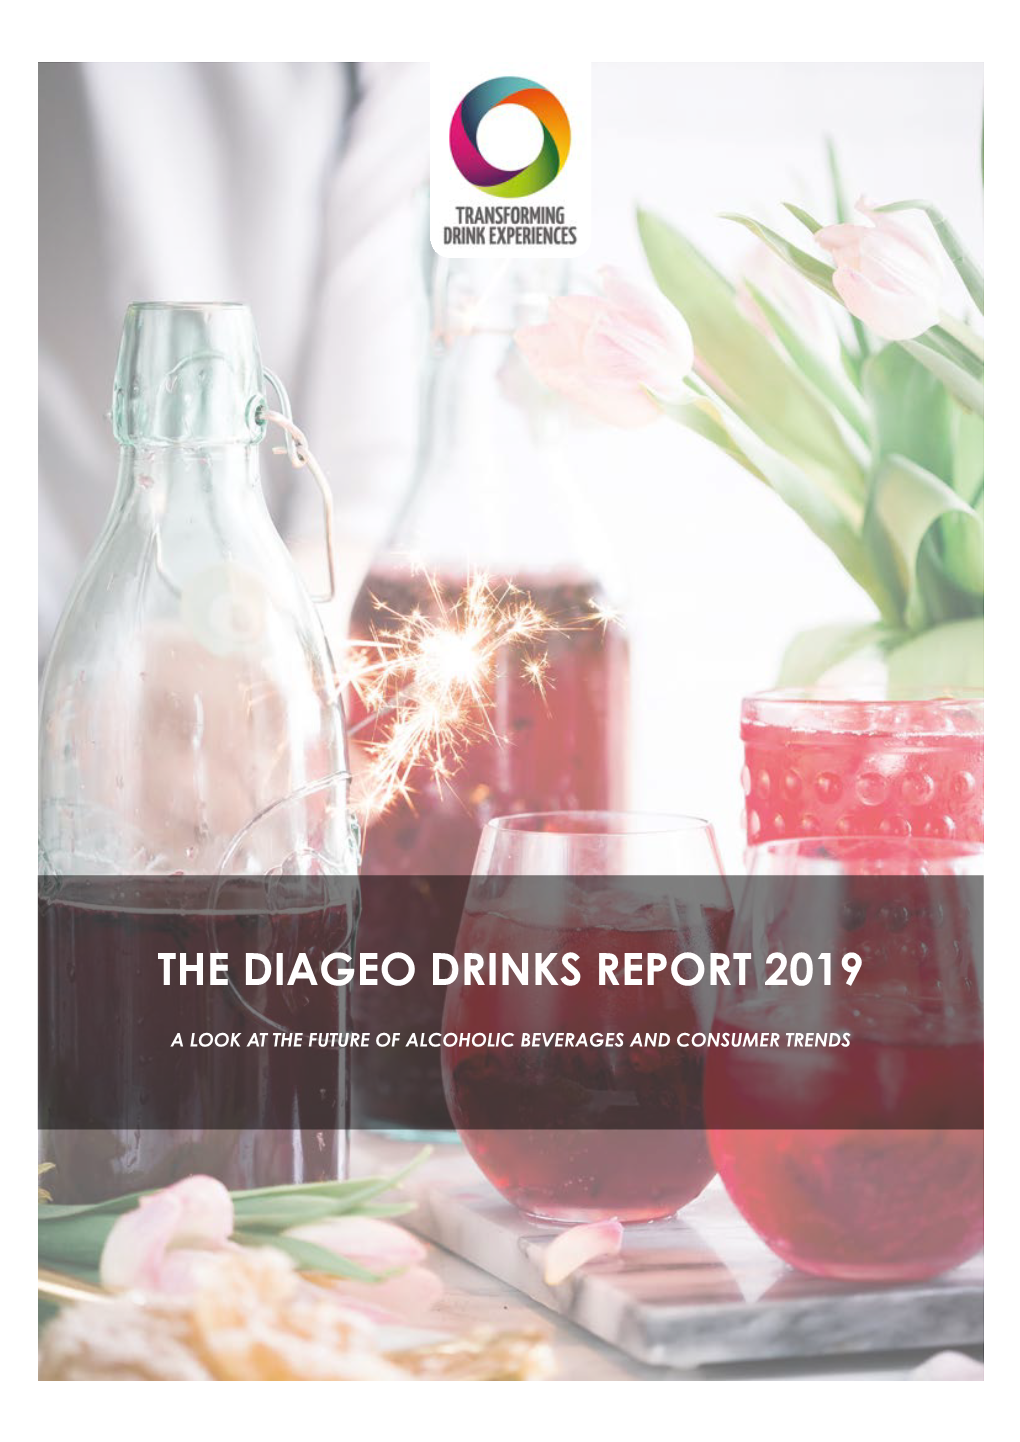 The Diageo Drinks Report 2019